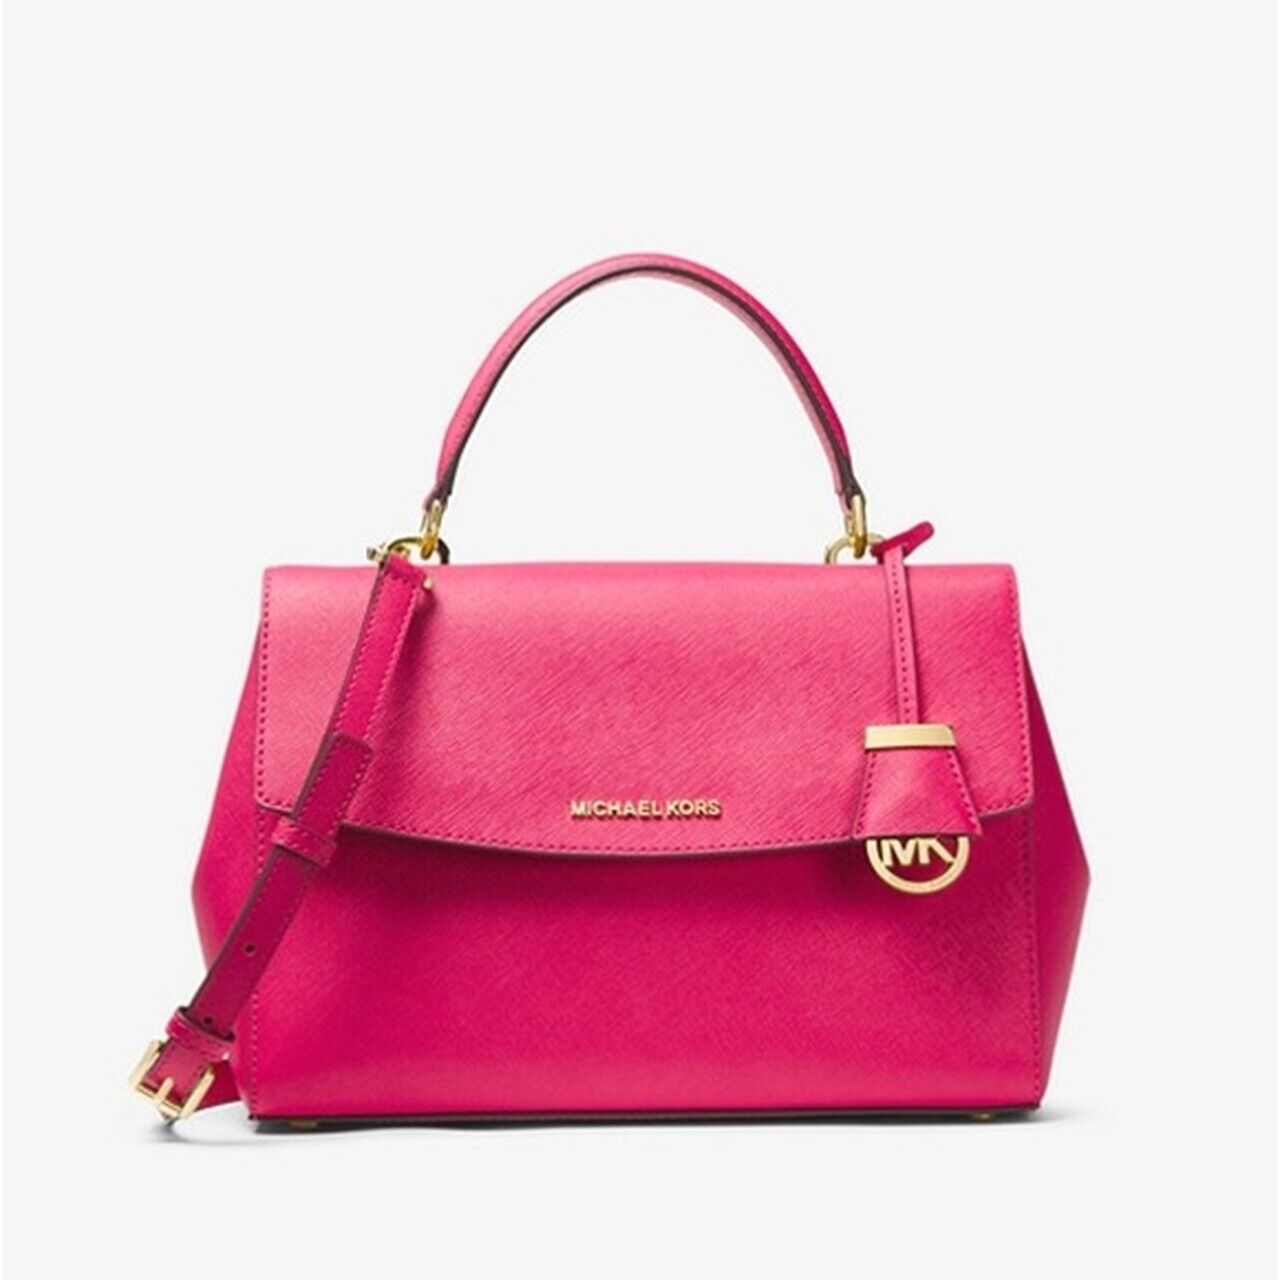  Women's Crossbody Handbags - Michael Kors / Pinks